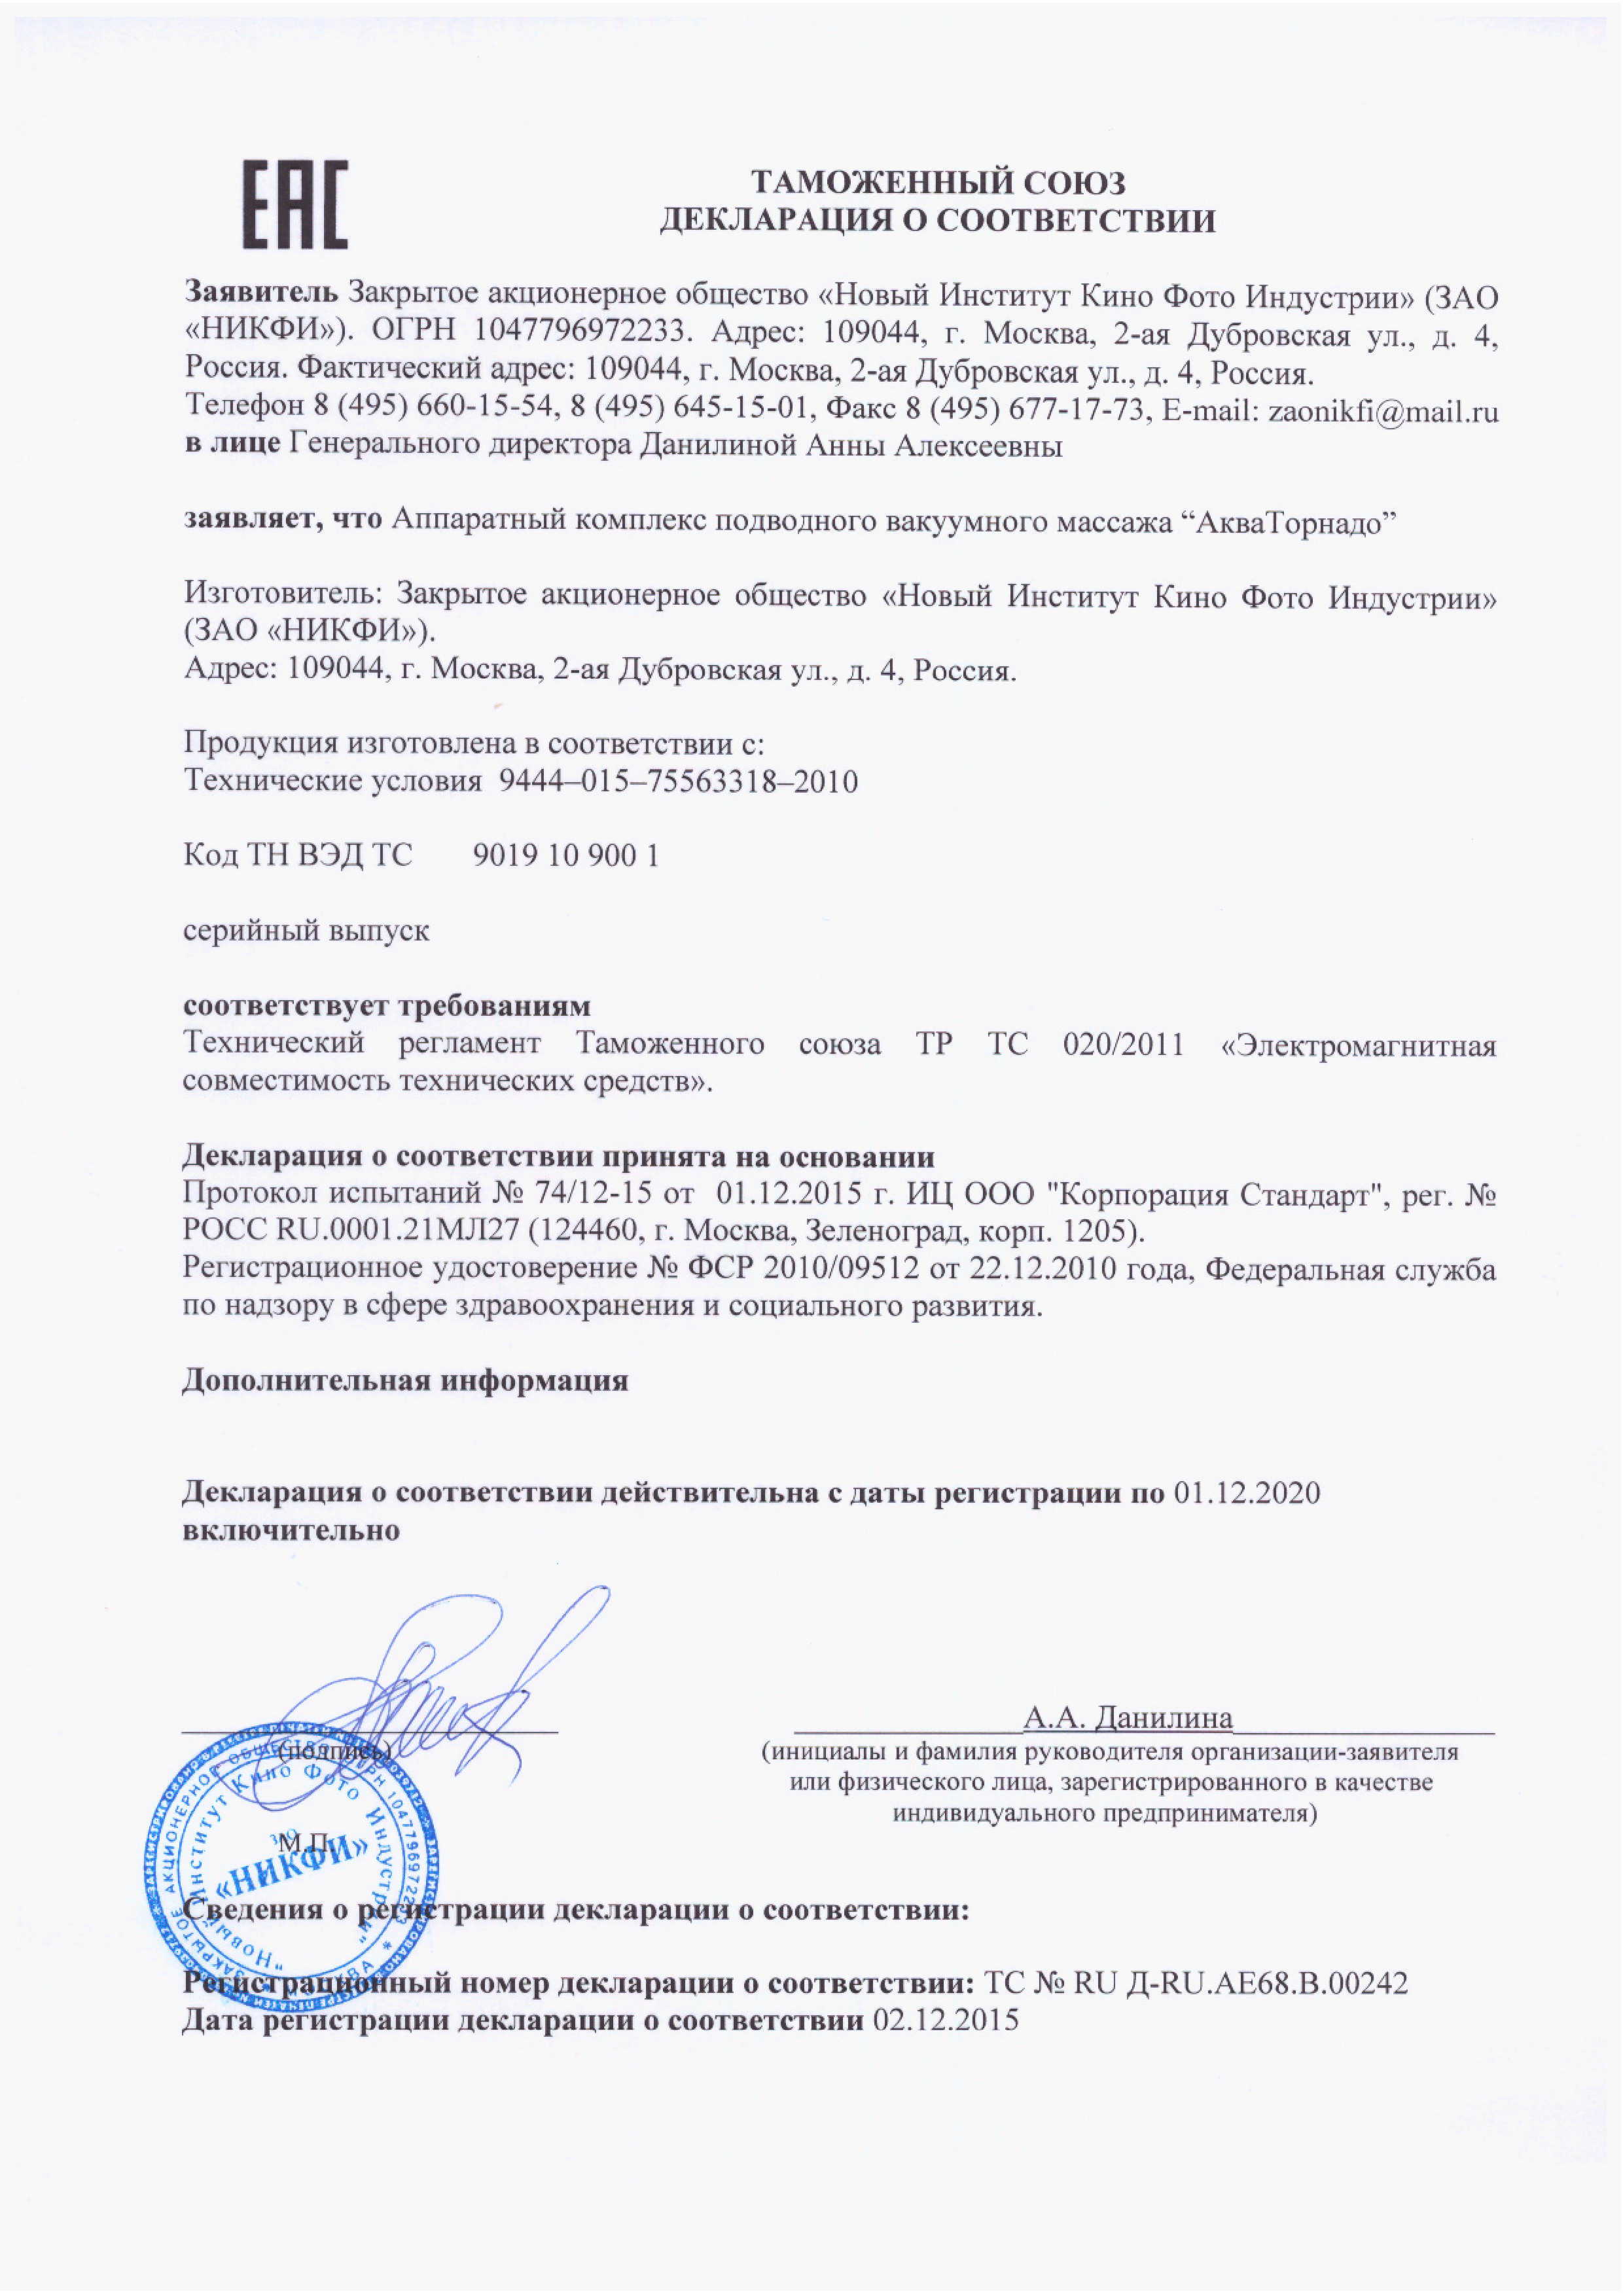 таможенная декларация регистрация акваторнадо